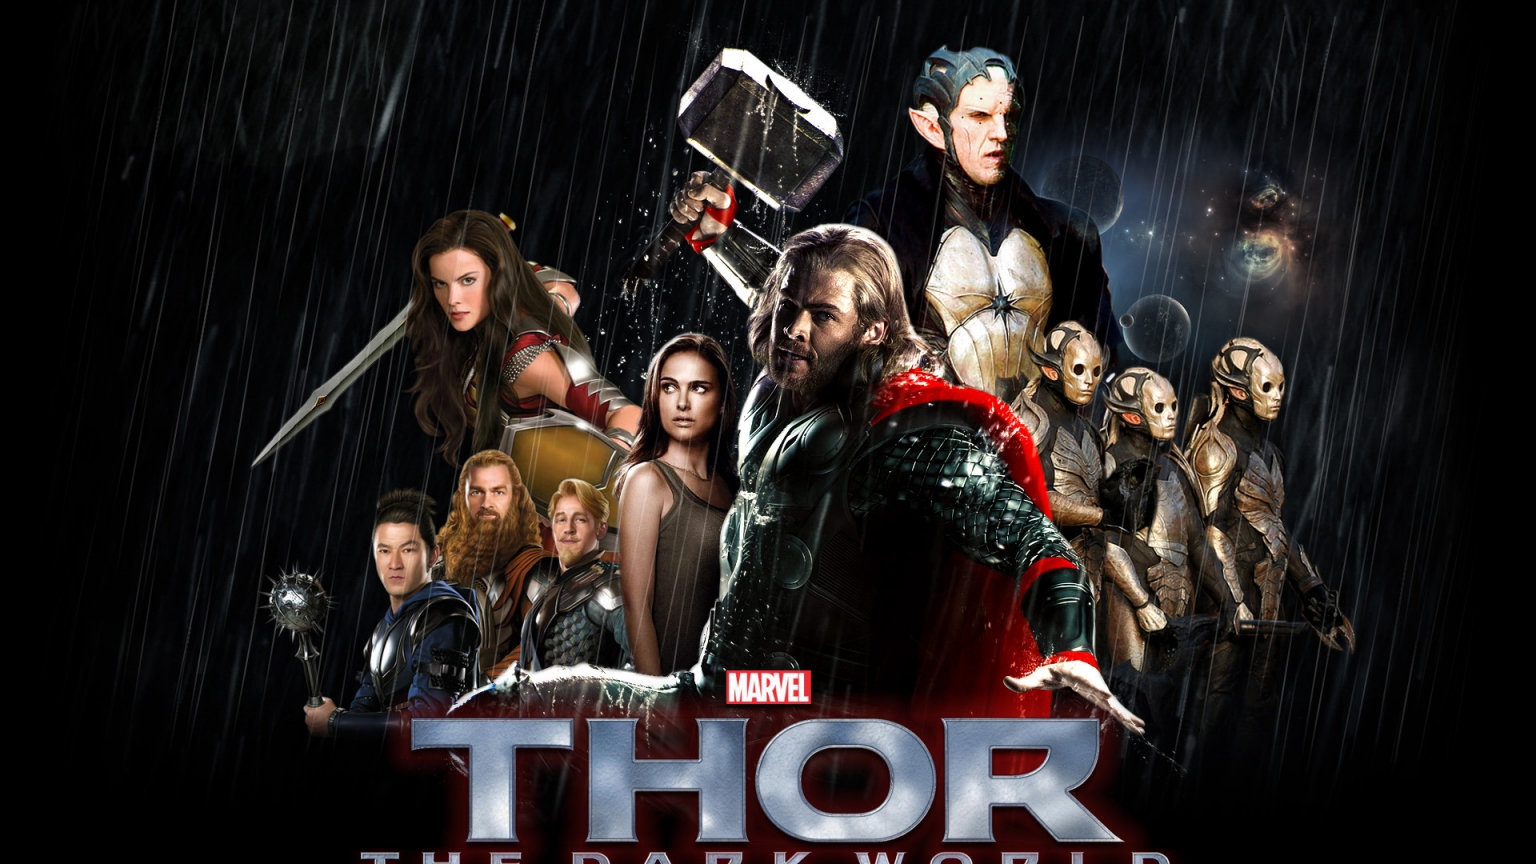 Thor The Dark World 2013 for 1536 x 864 HDTV resolution